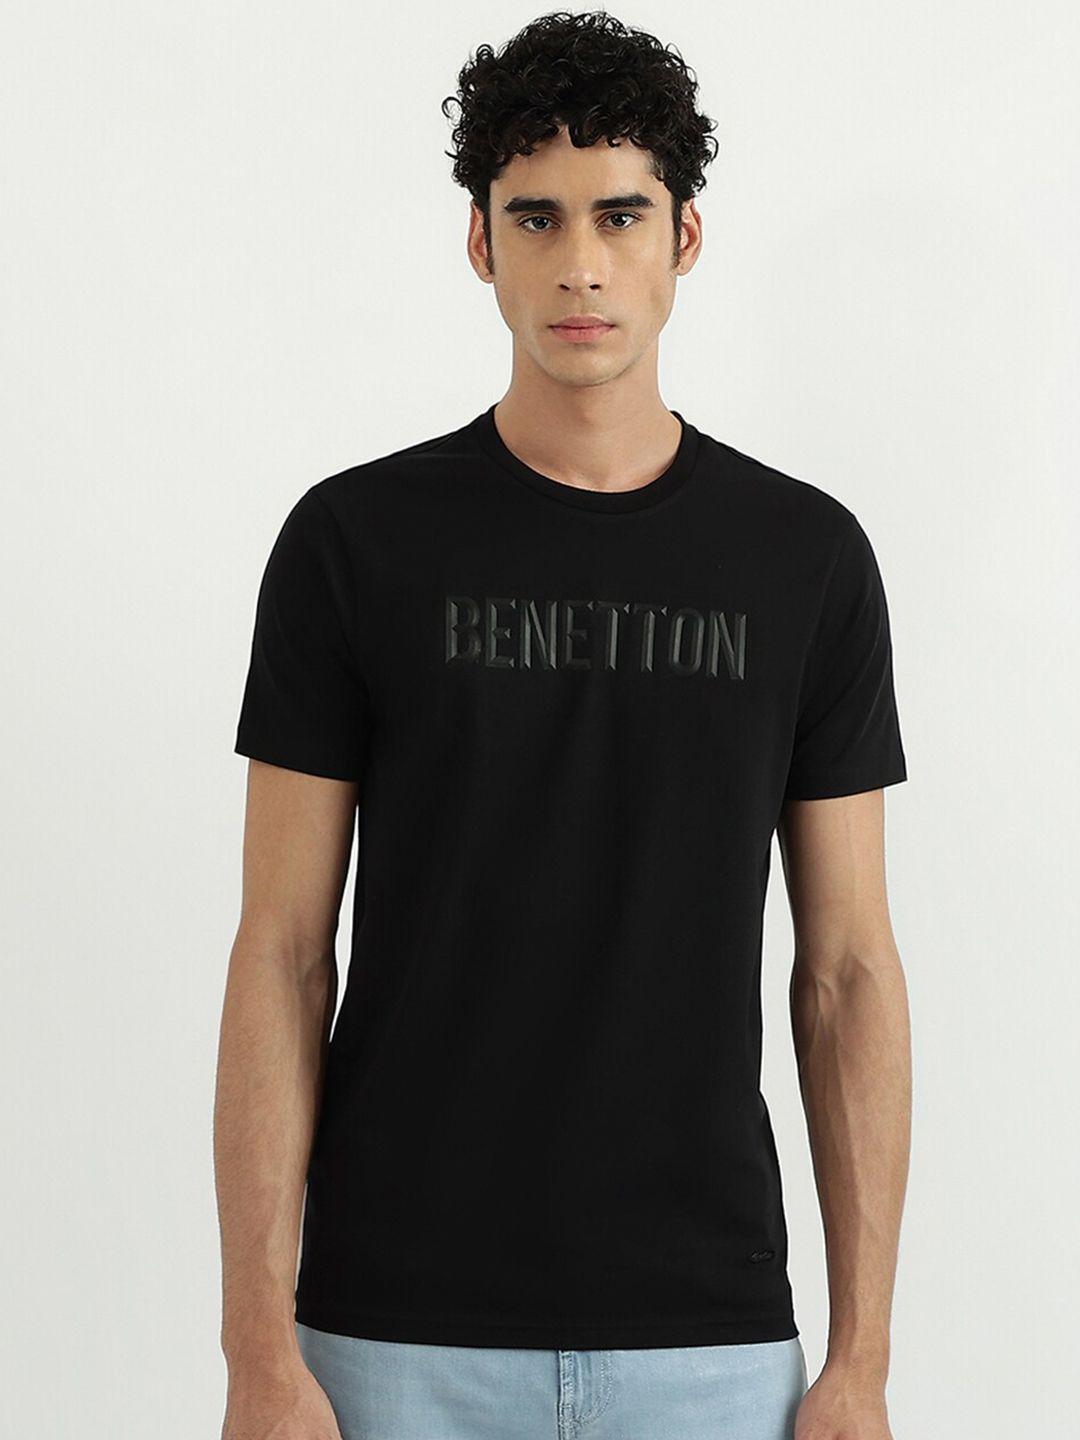 united colors of benetton men black typography printed applique cotton t-shirt